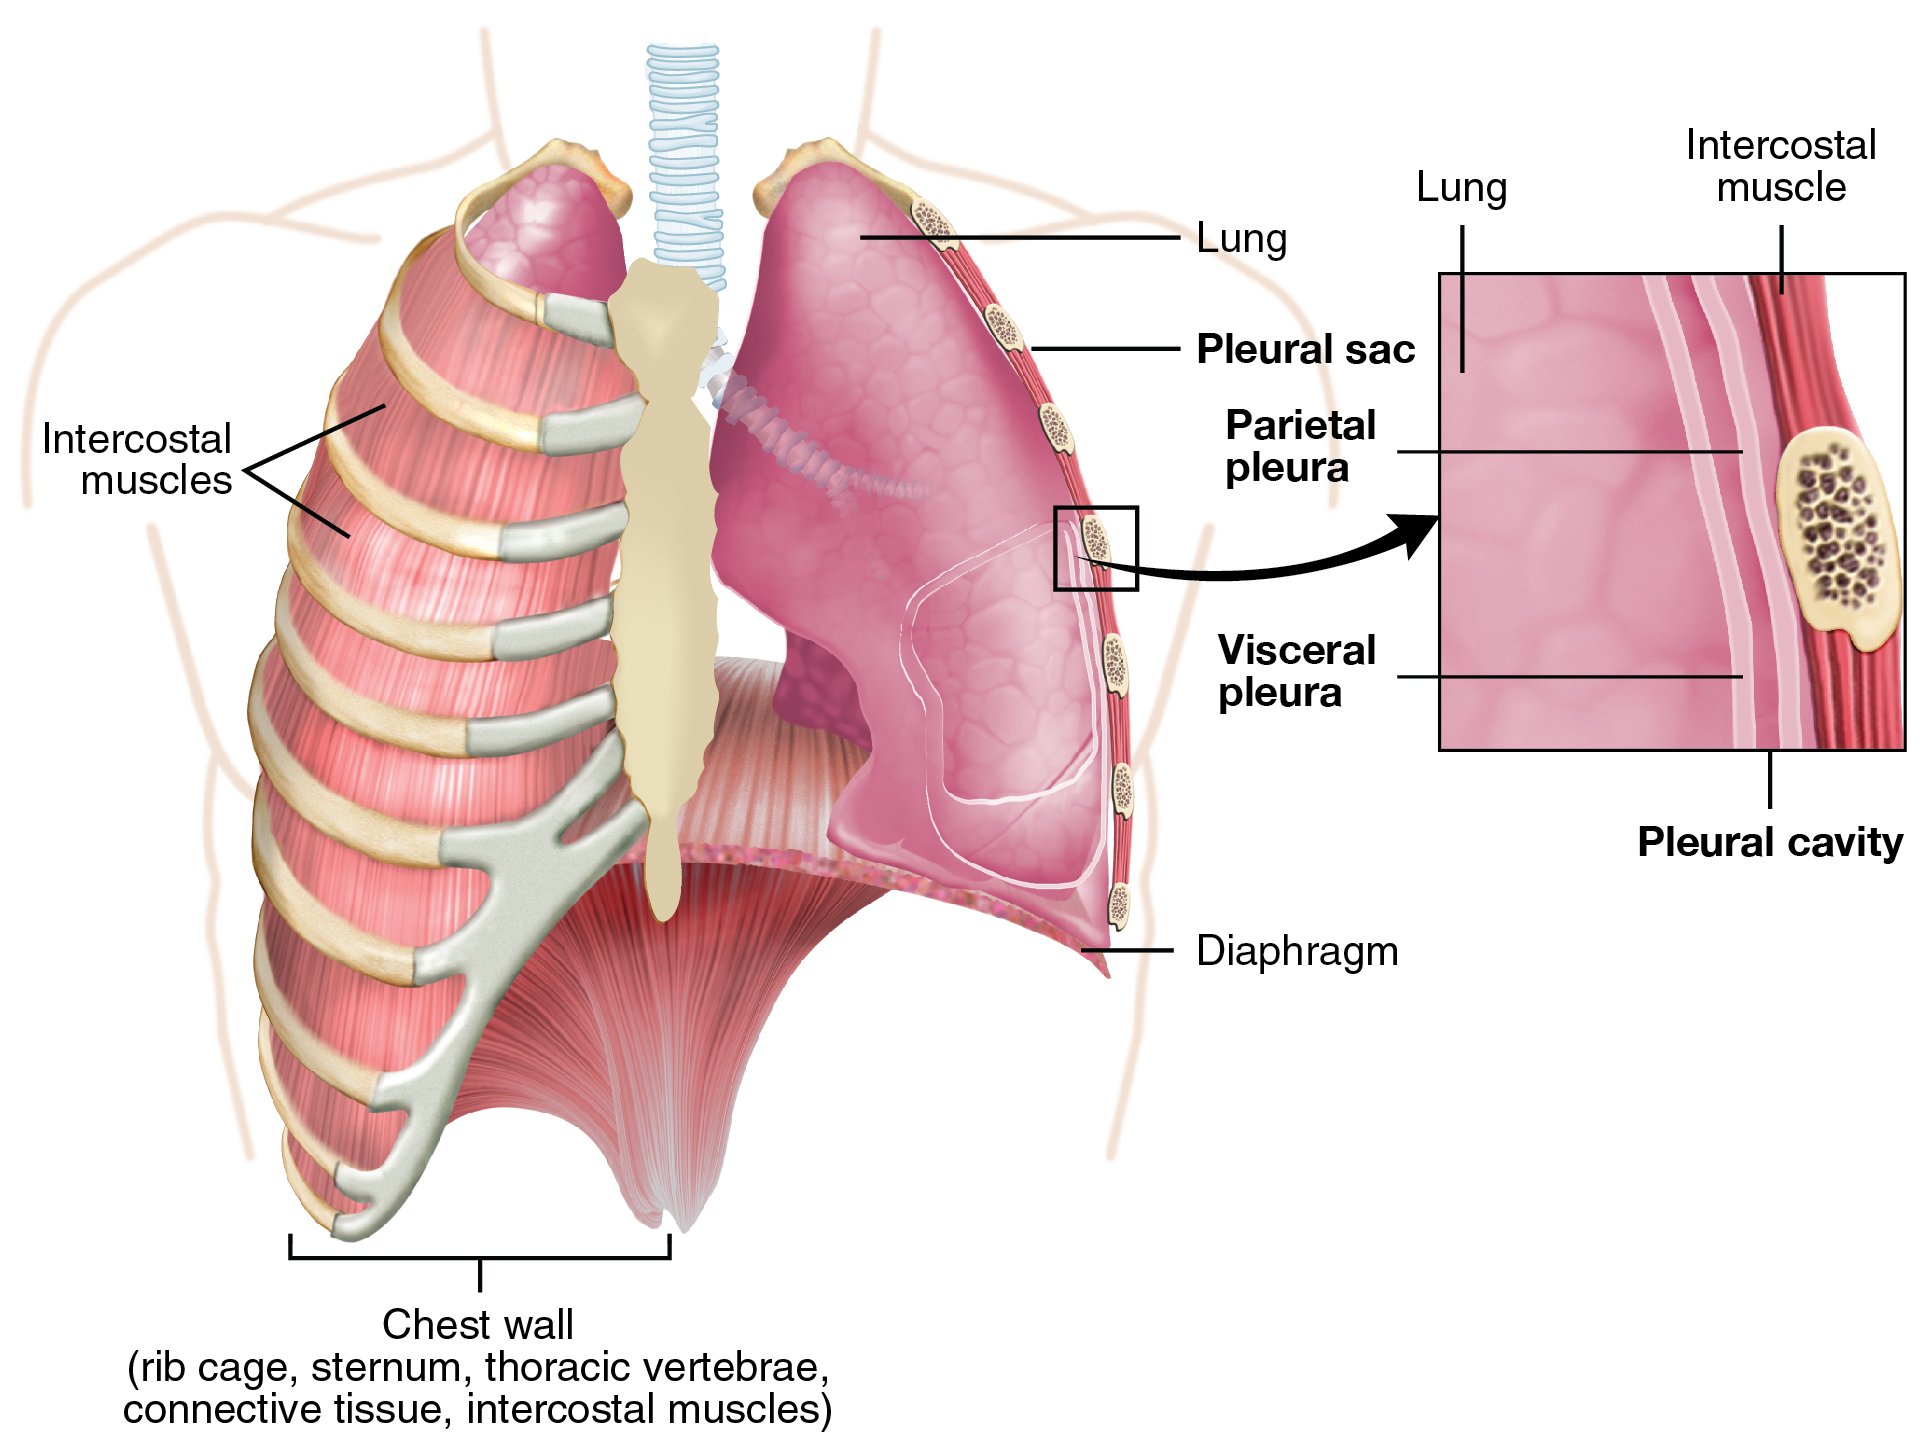 Image 2 - Anatomy of pleural interface.jpg